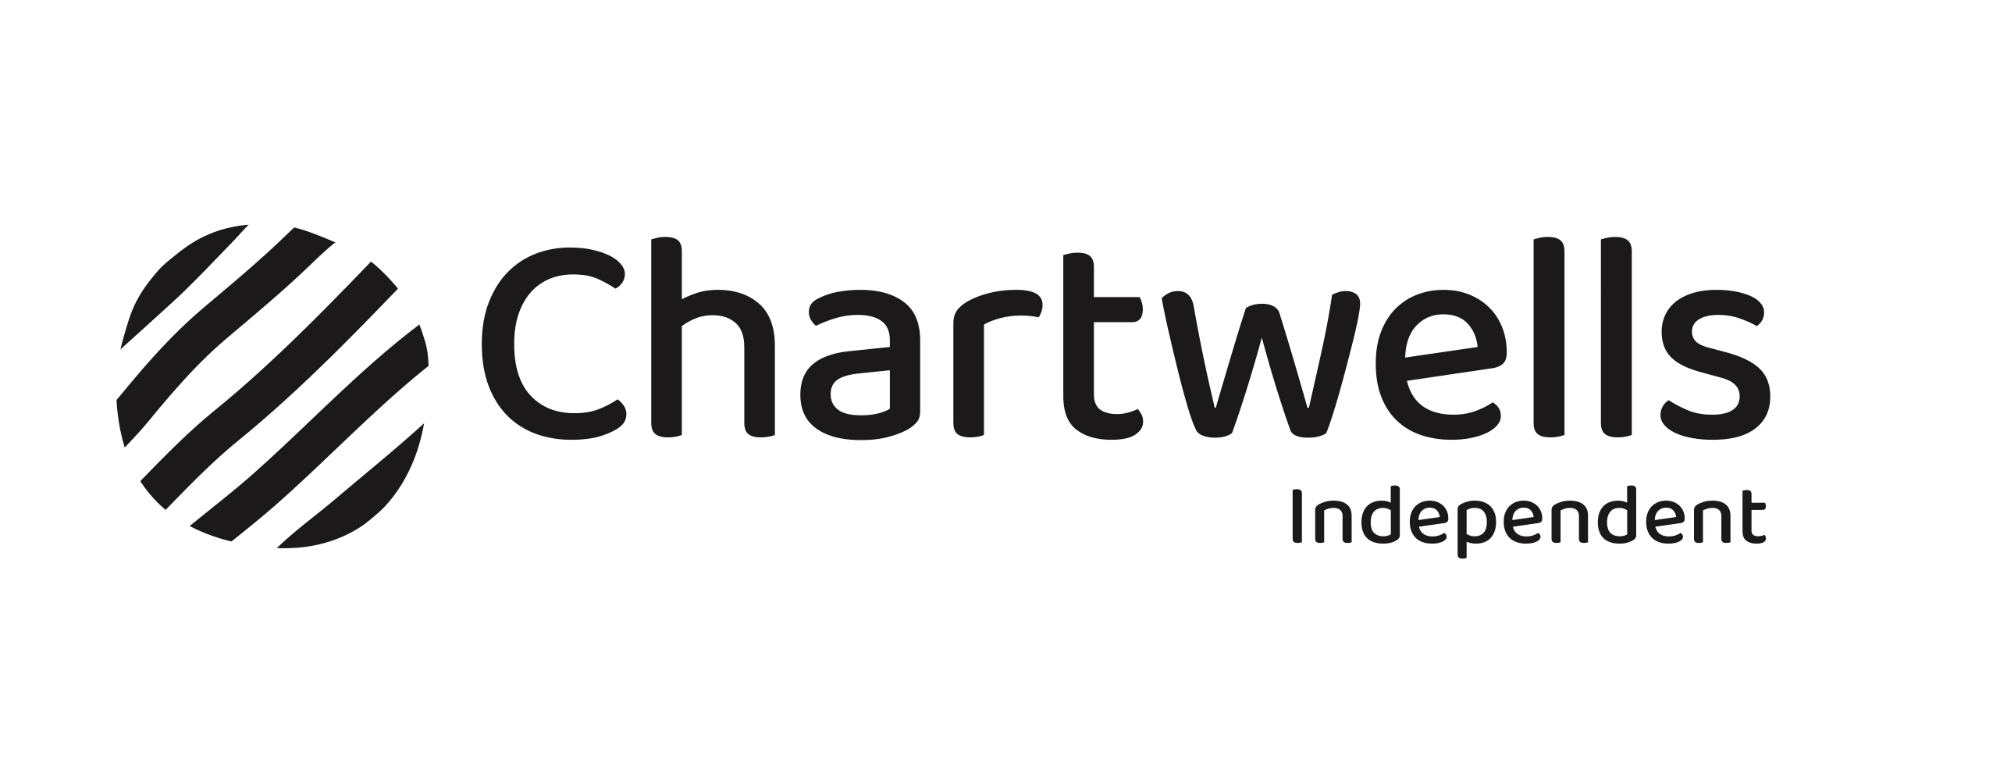 Image of Chartwells Independent logo